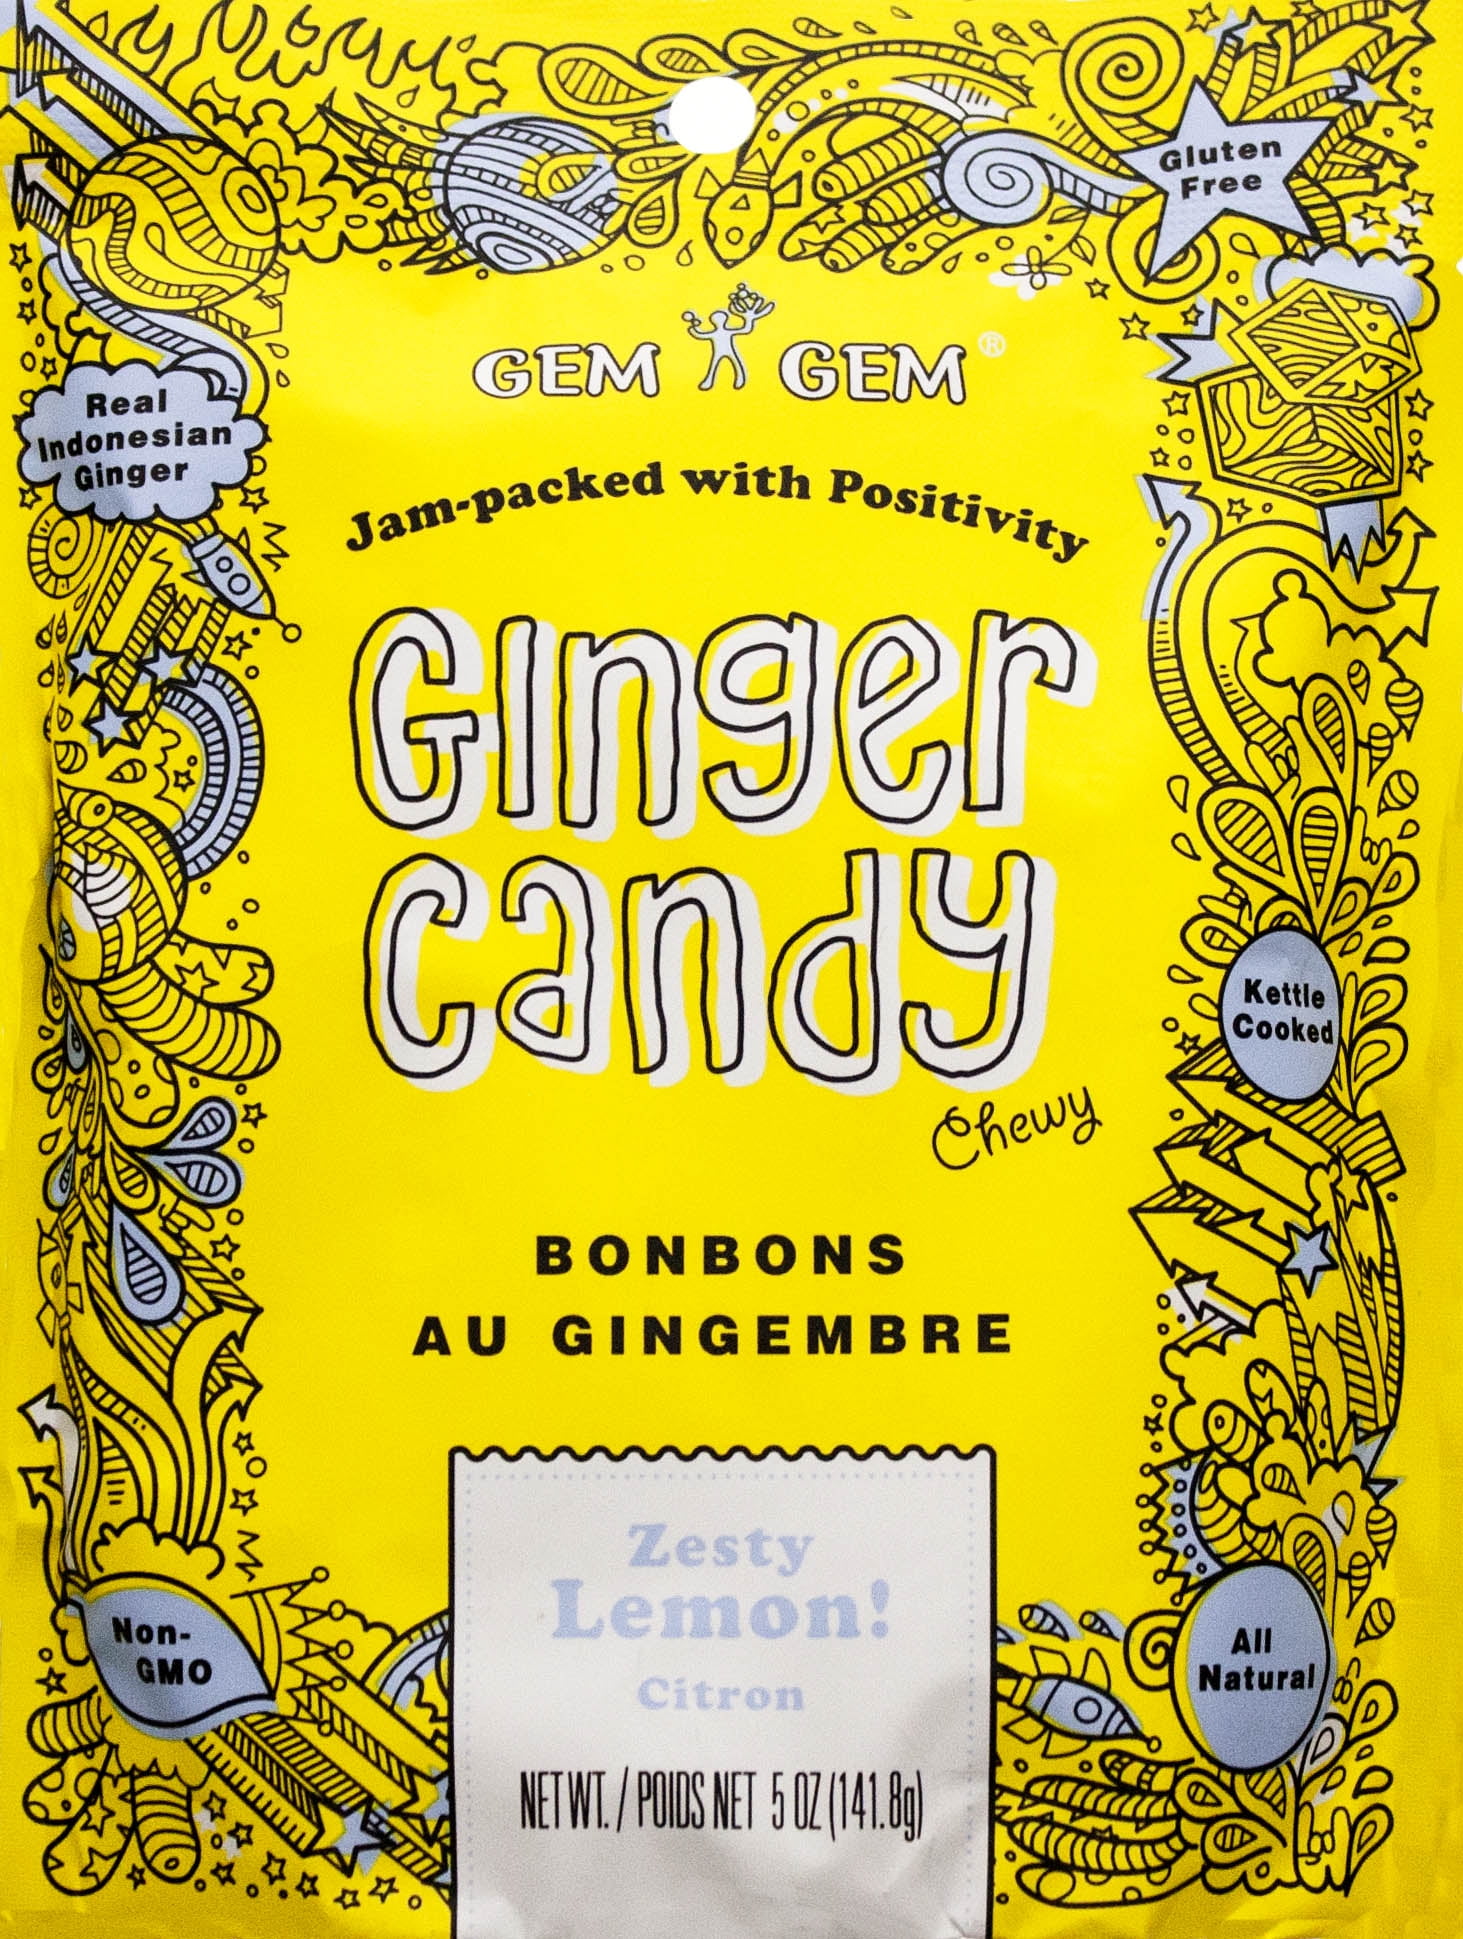 Gem Gem Ginger Lemon Candy Walmart Com Walmart Com